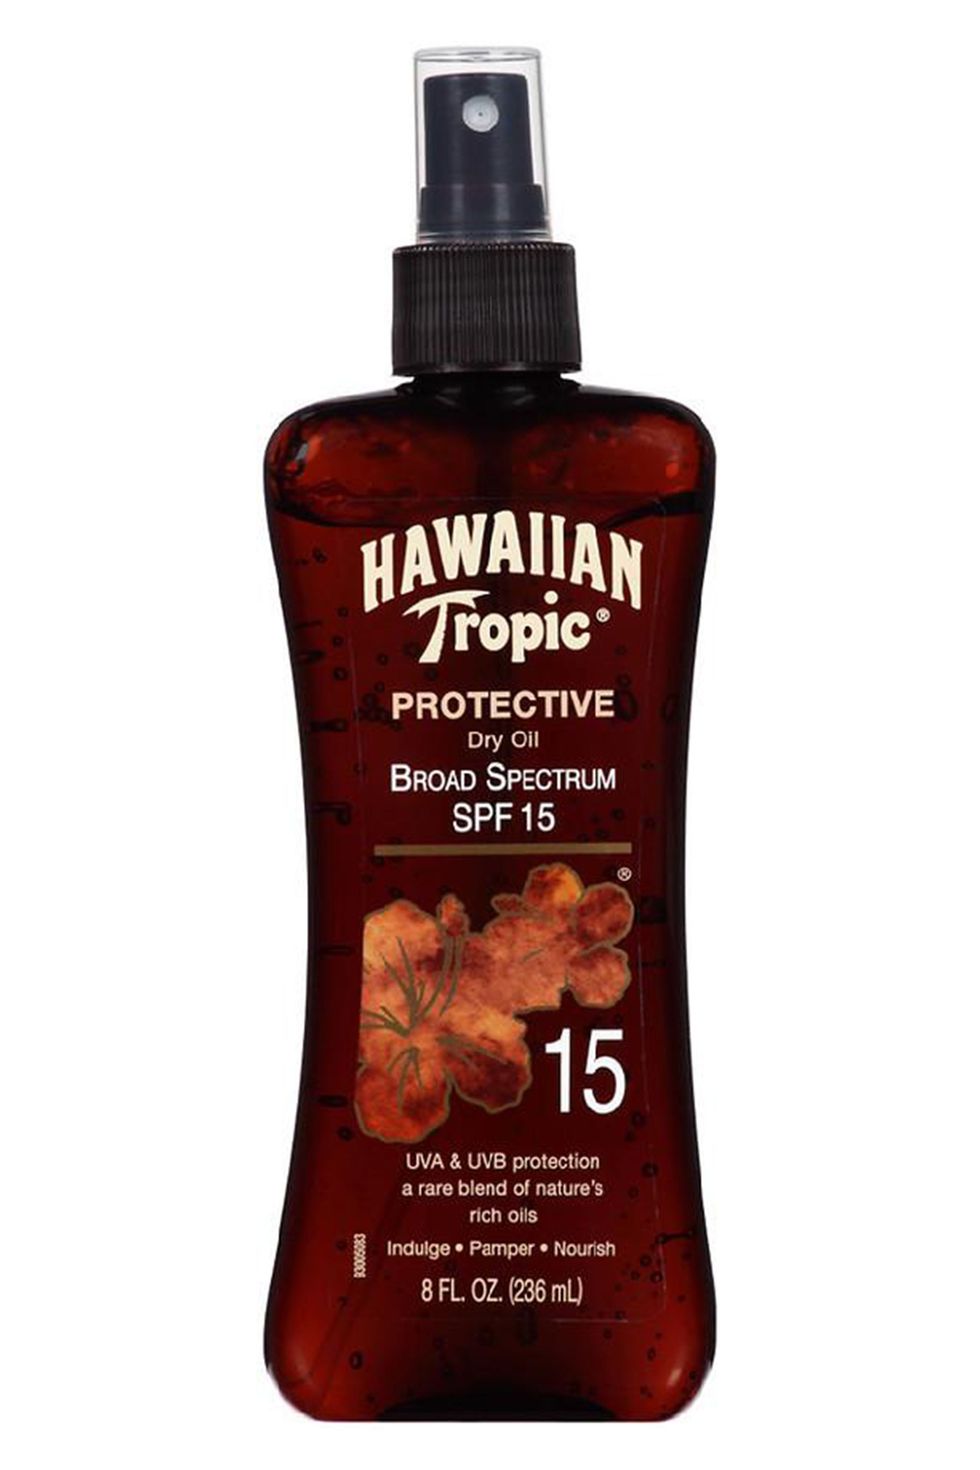 1592925093 Tanning Oil Hawaiian Tropic Spray Spf 15 1592925085 ?crop=1xw 1xh;center,top&resize=980 *